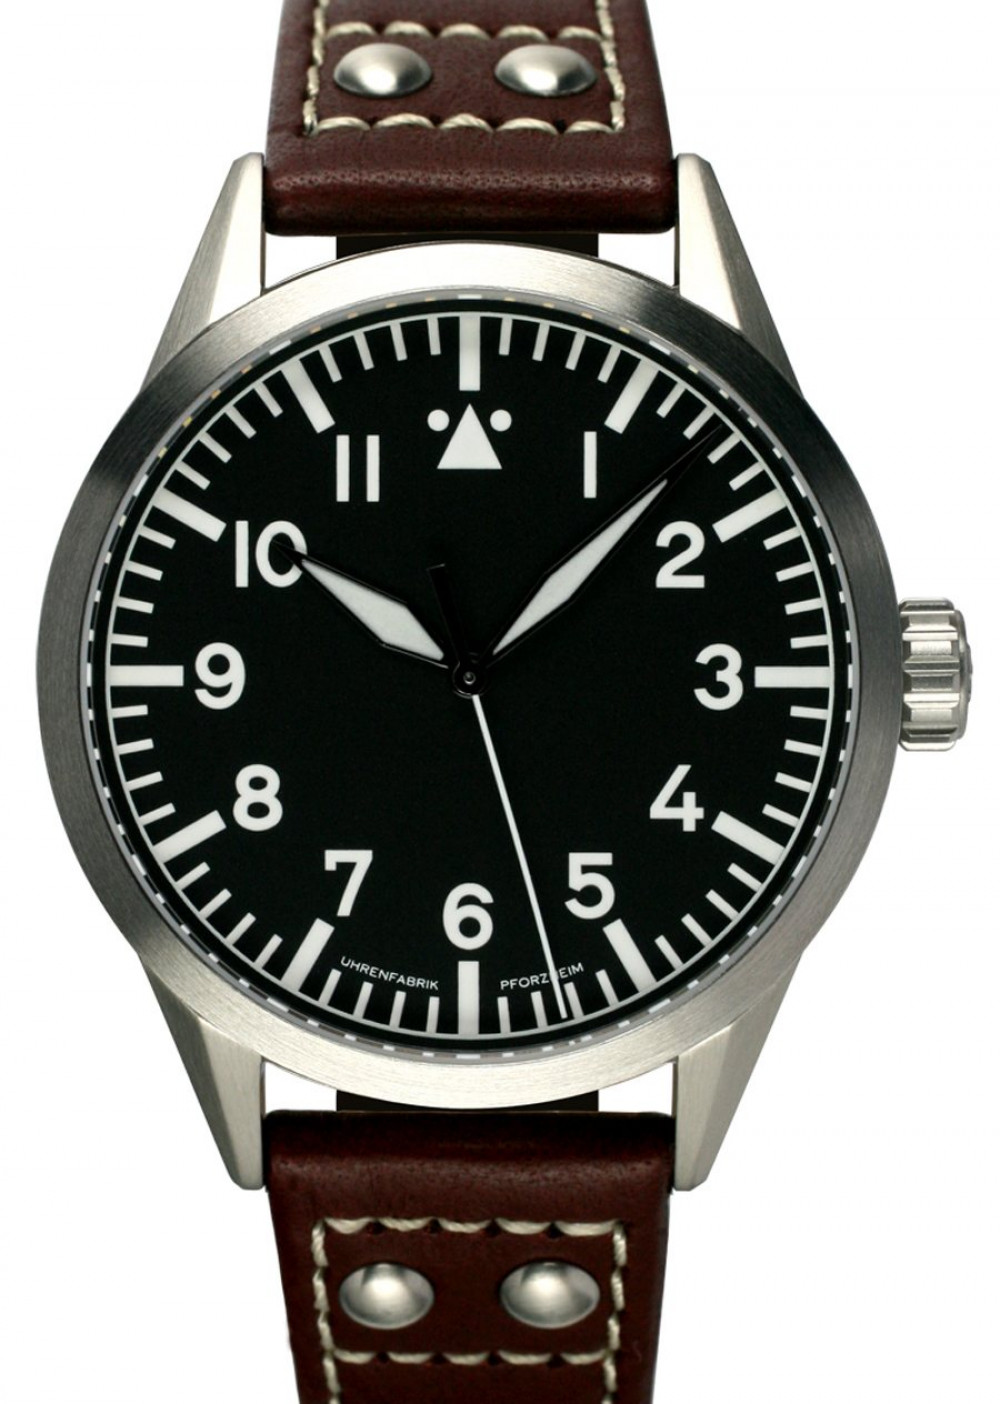 Zegarek firmy Autran & Viala, model Aviator A